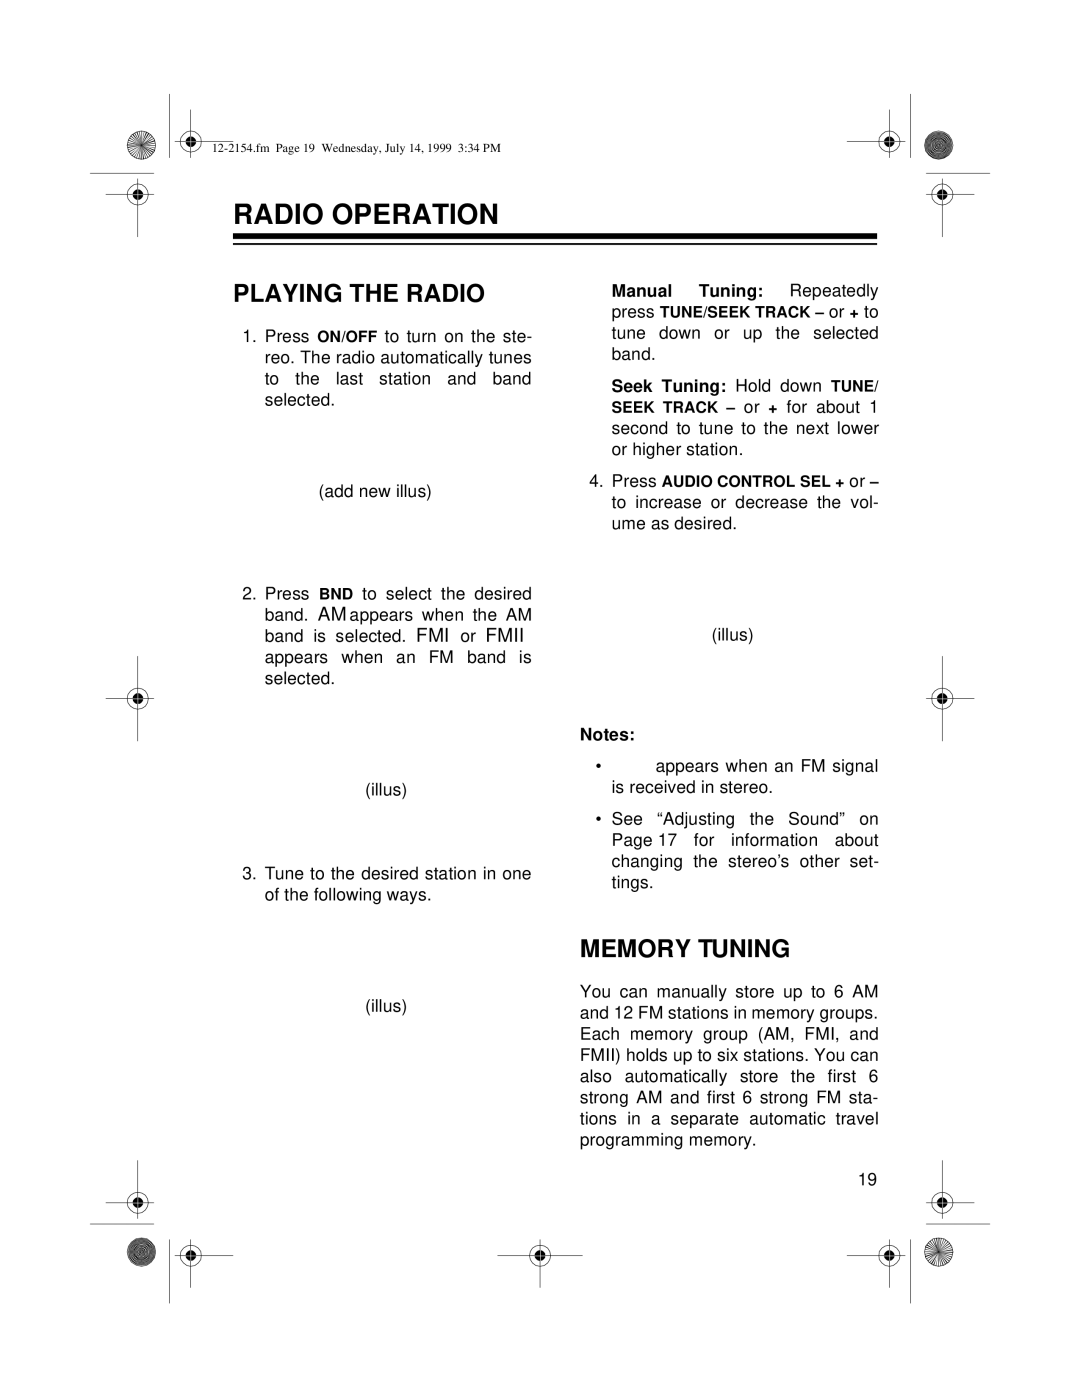 Optimus 12-2154, 12-2155 owner manual Radio Operation, Playing the Radio, Memory Tuning 